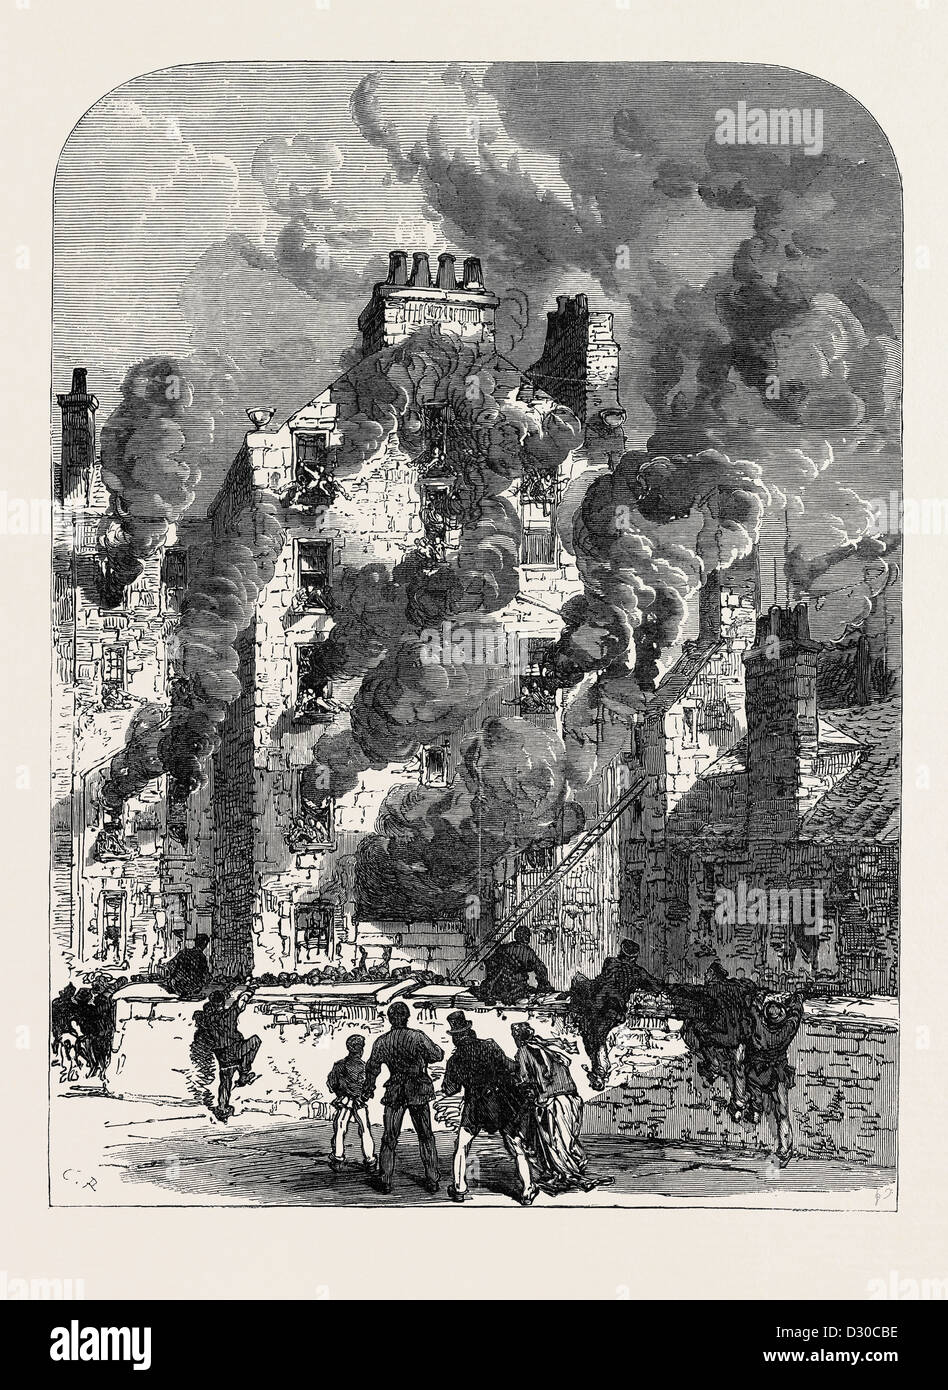 THE FATAL FIRE IN THE CANONGATE EDINBURGH UK 1867 Stock Photo